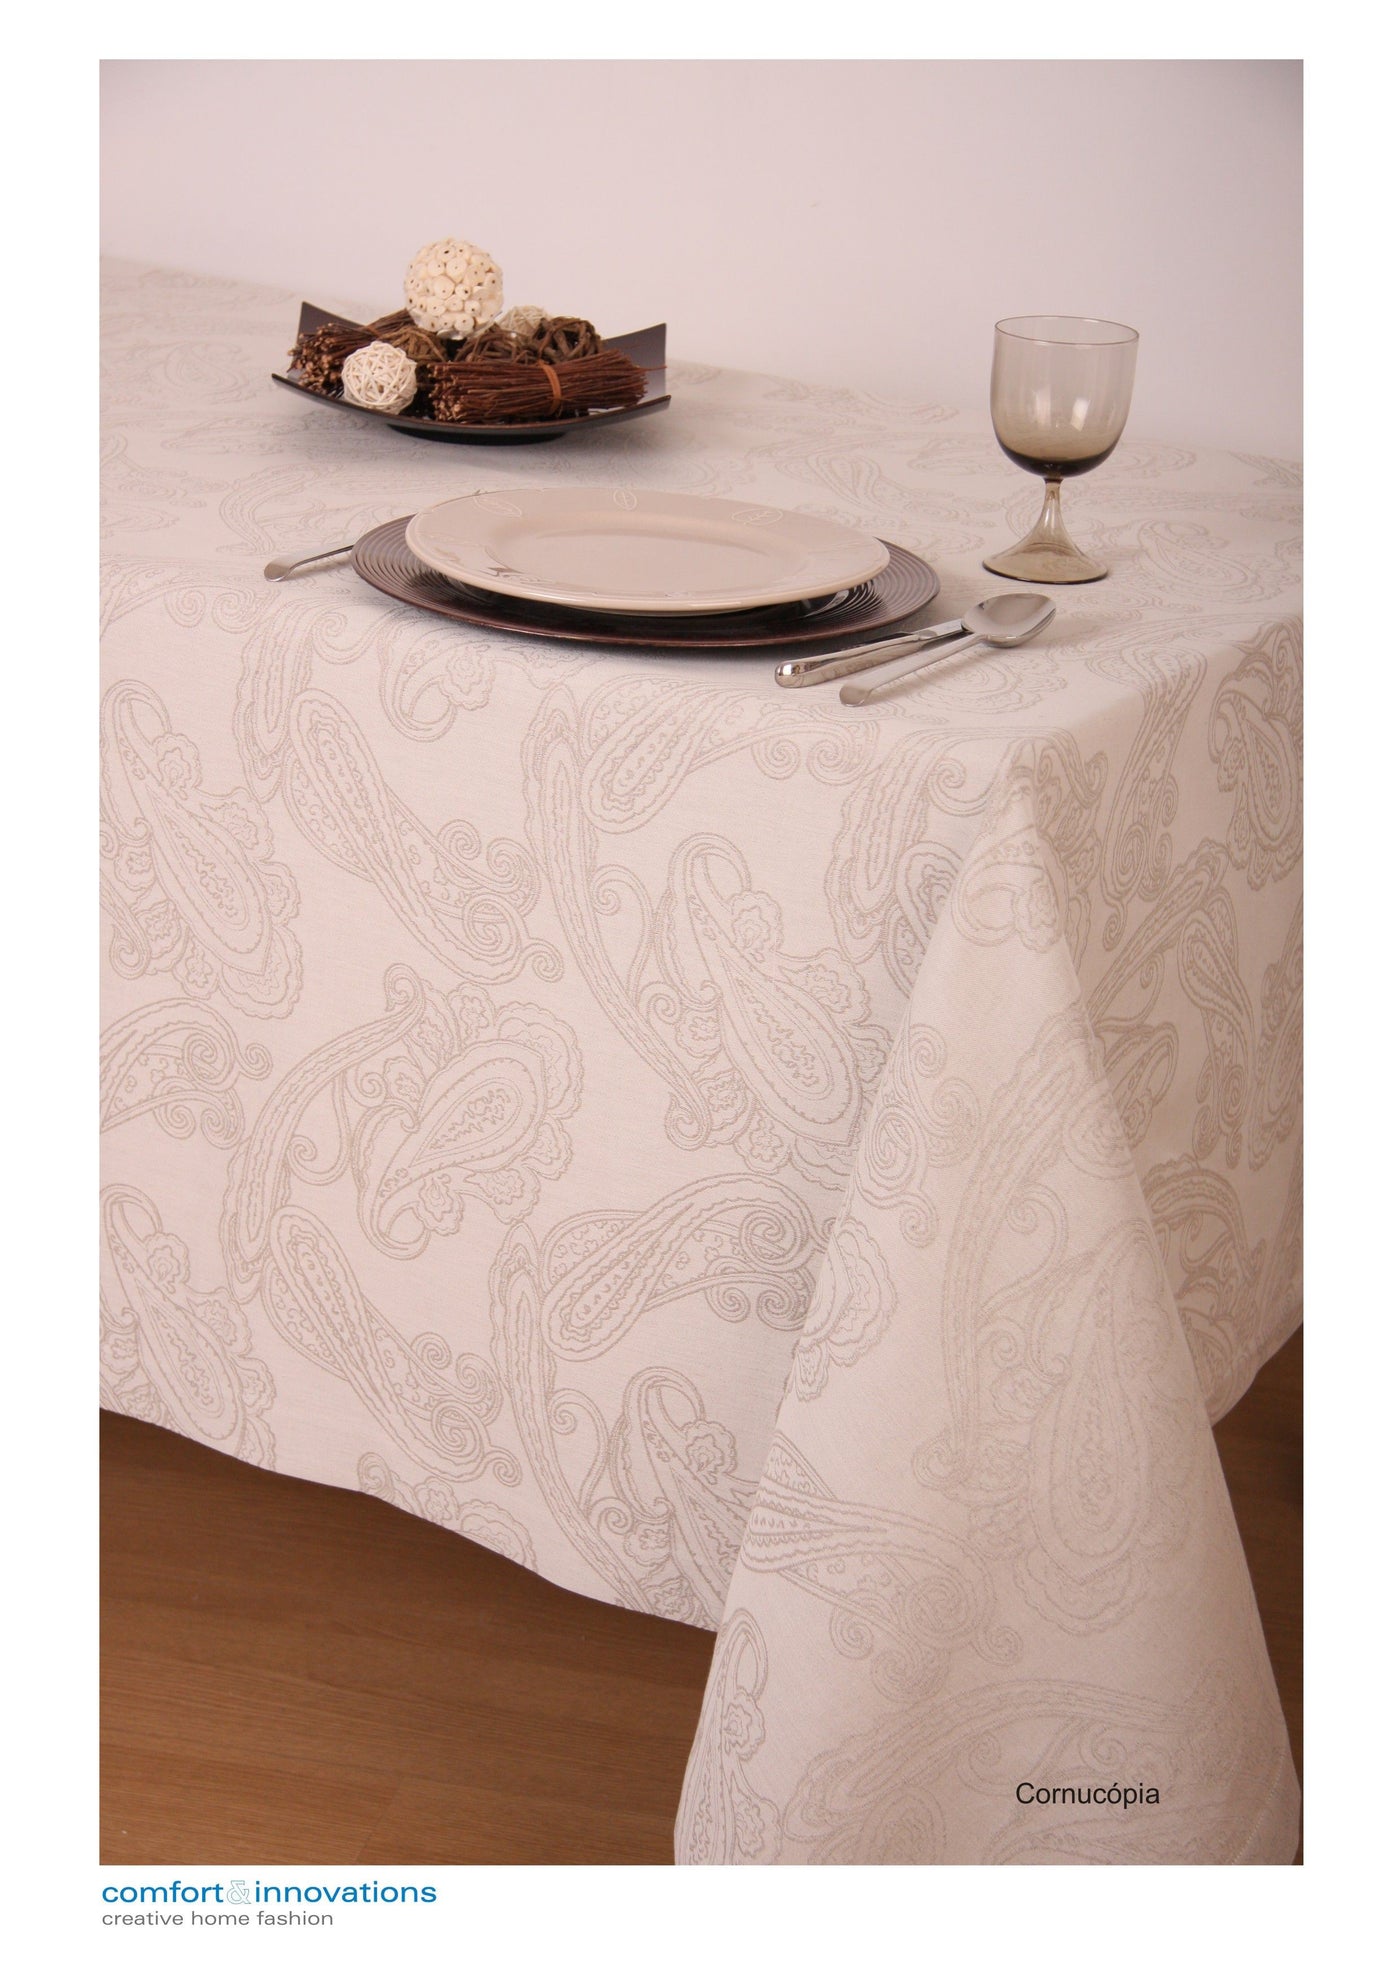 St. Pierre Cornucopia Table Linen